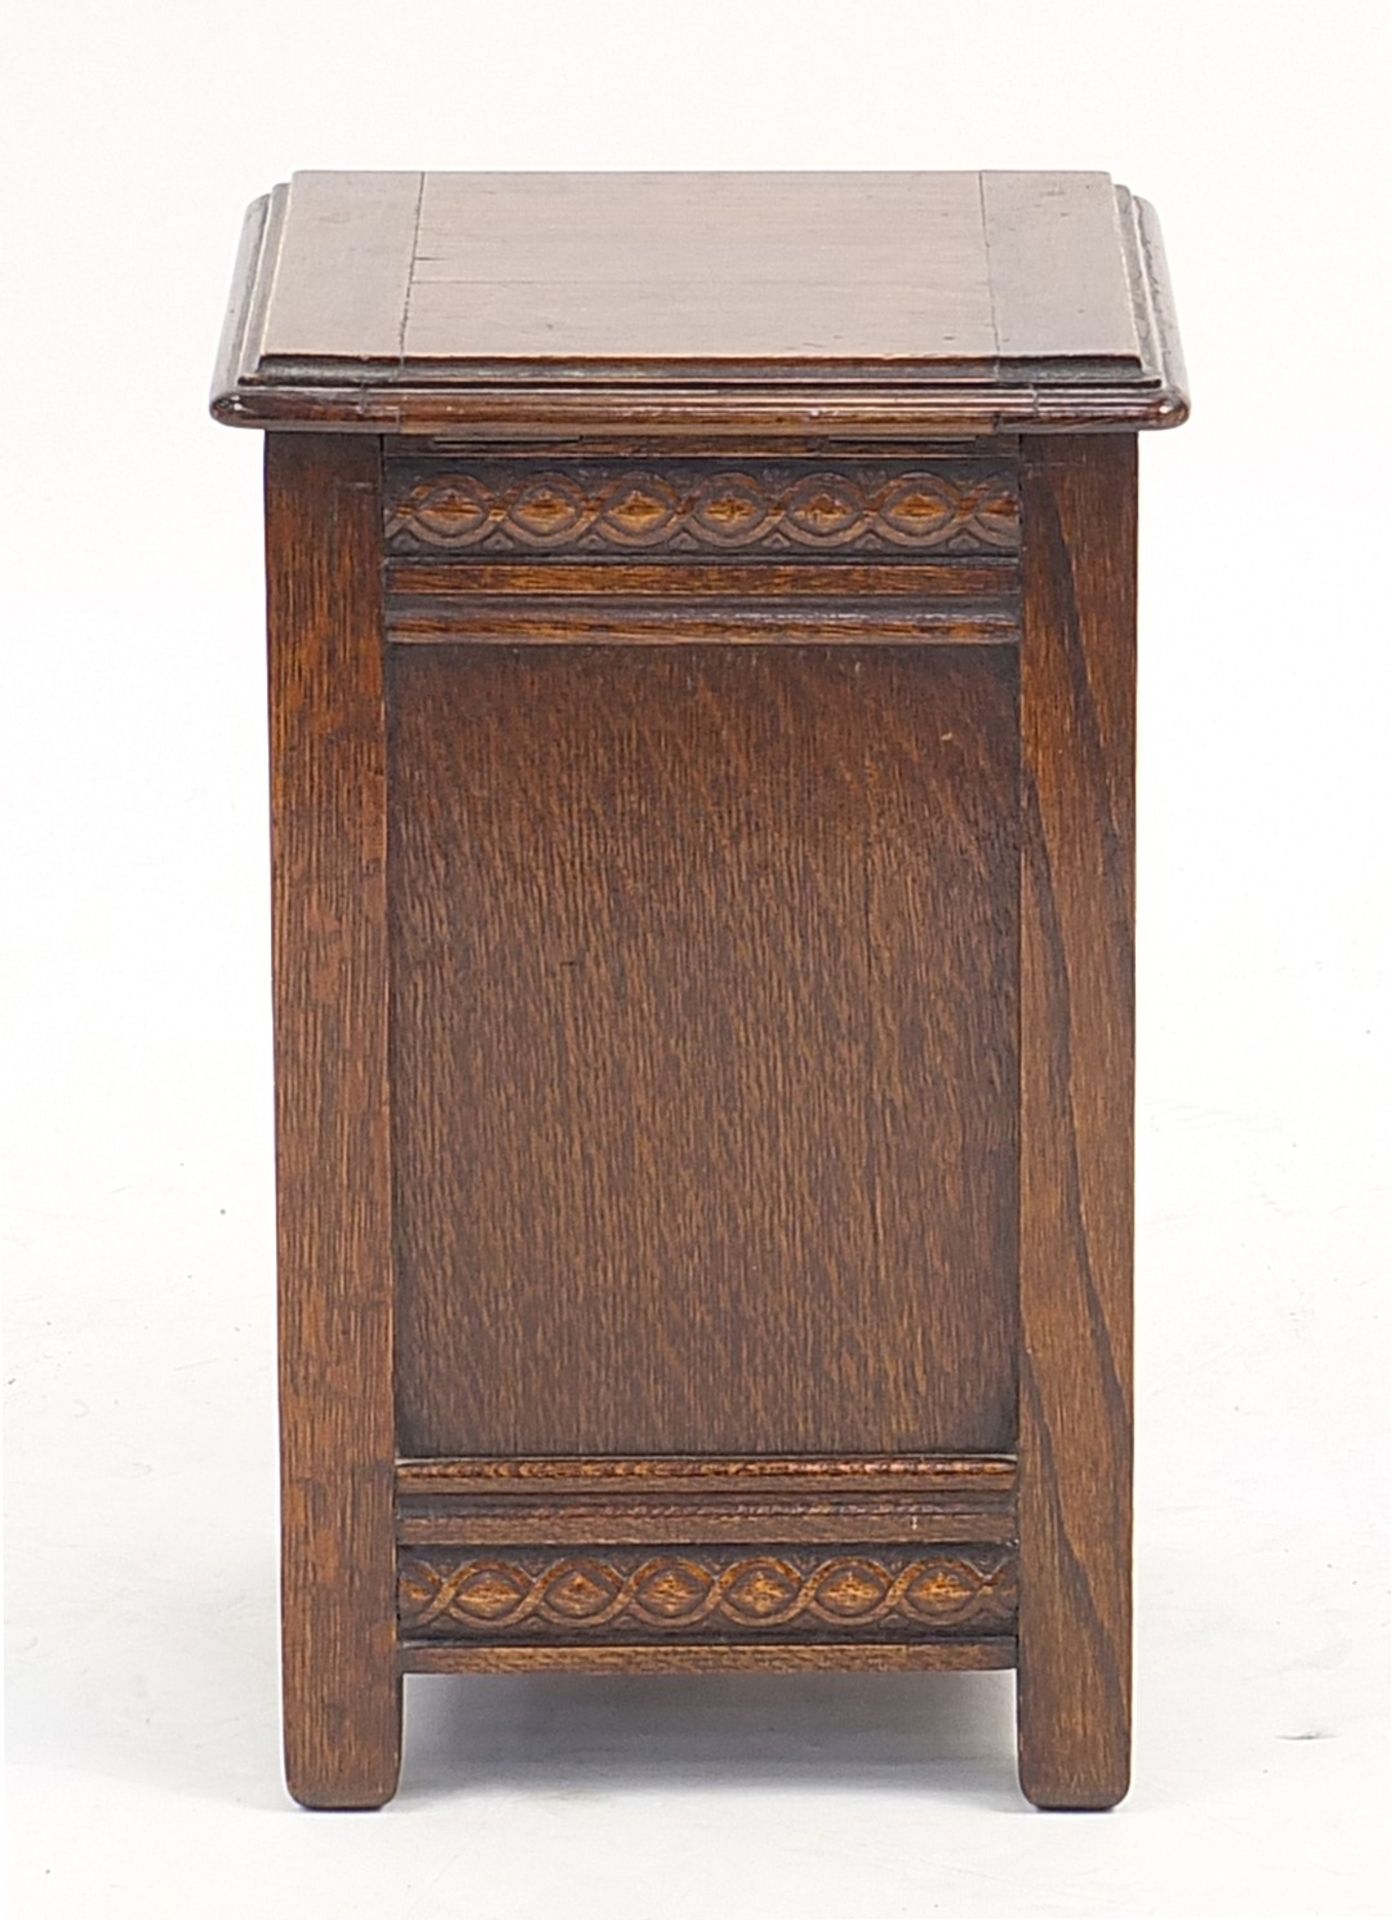 Arts & Crafts oak box with hinged lid, 40cm H x 25.5cm W x 25cm D - Image 3 of 3